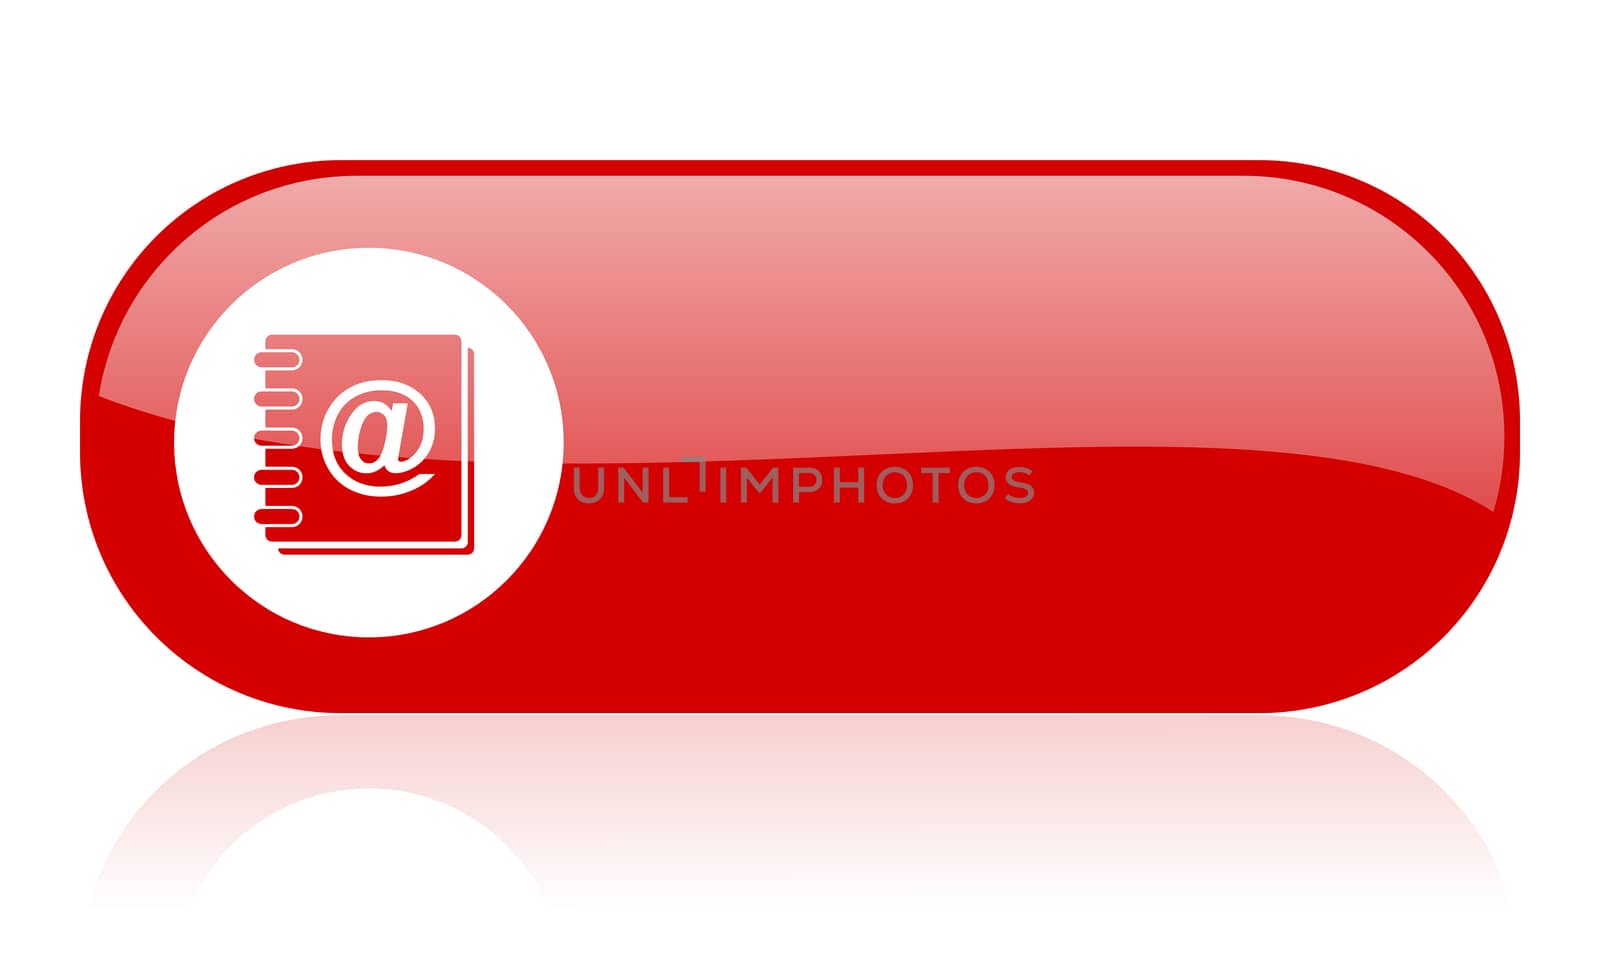 address book red web glossy icon by alexwhite